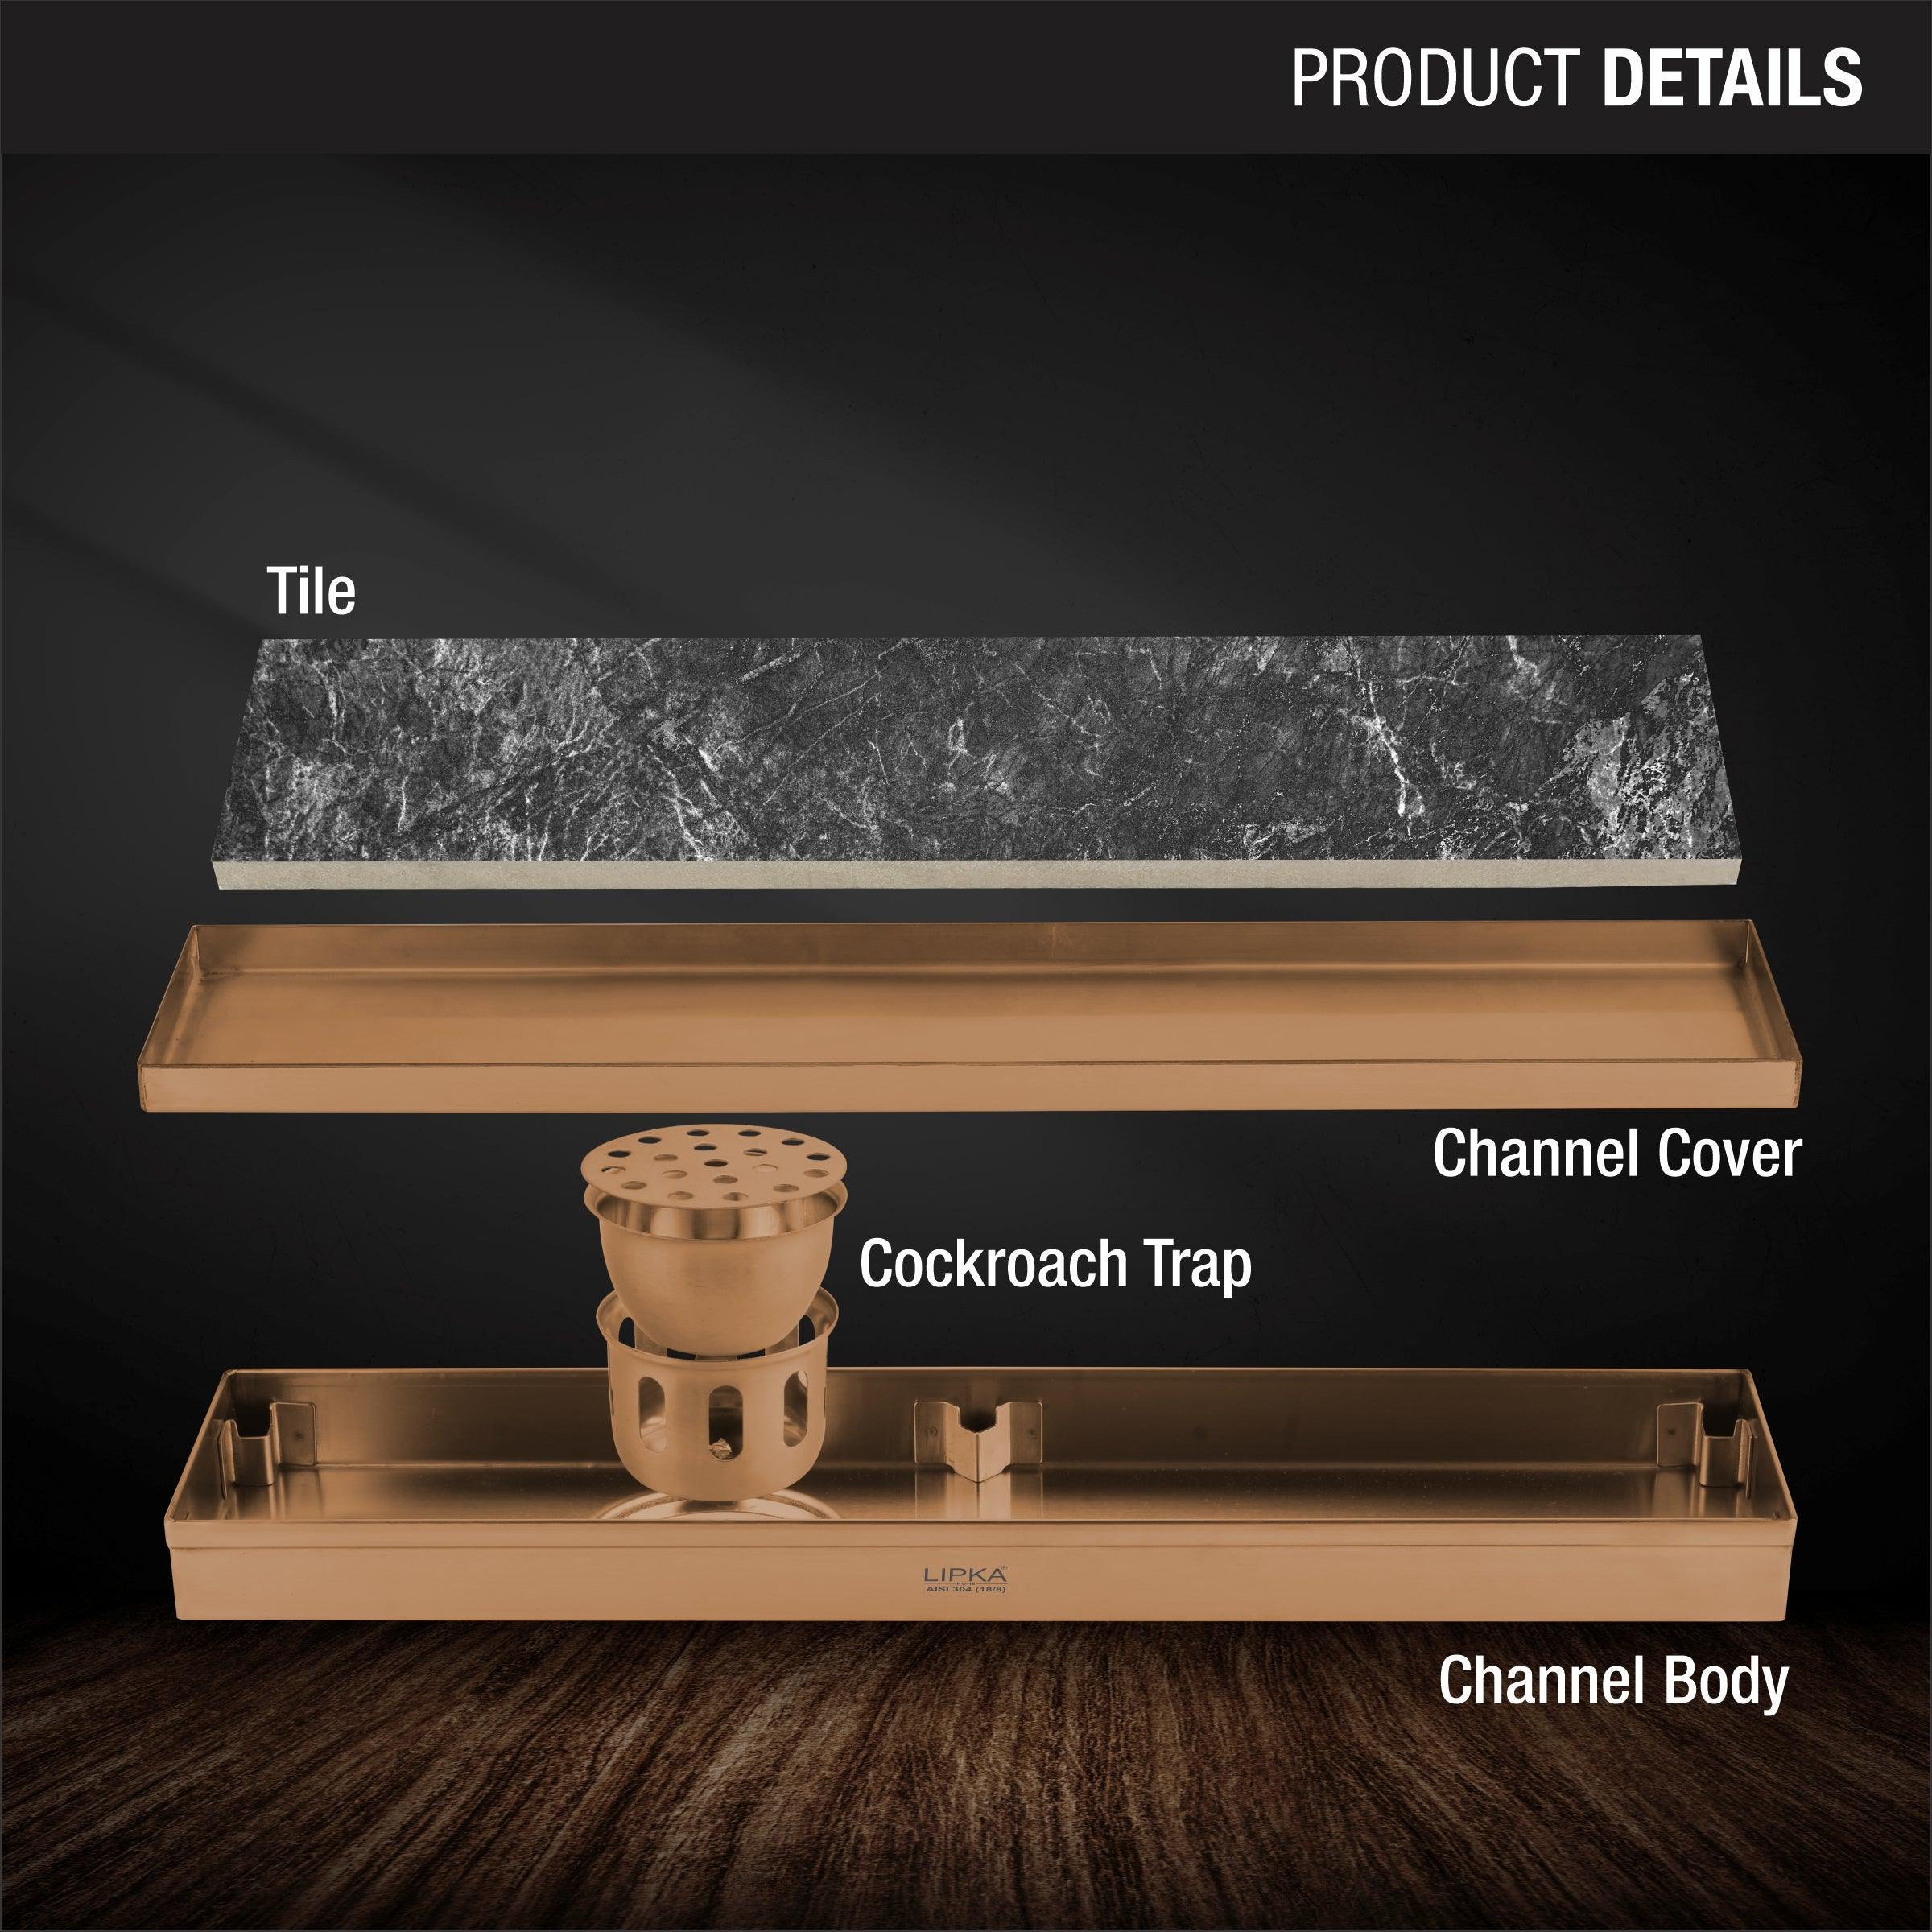 Tile Insert Shower Drain Channel - Antique Copper (24 x 4 Inches) product details